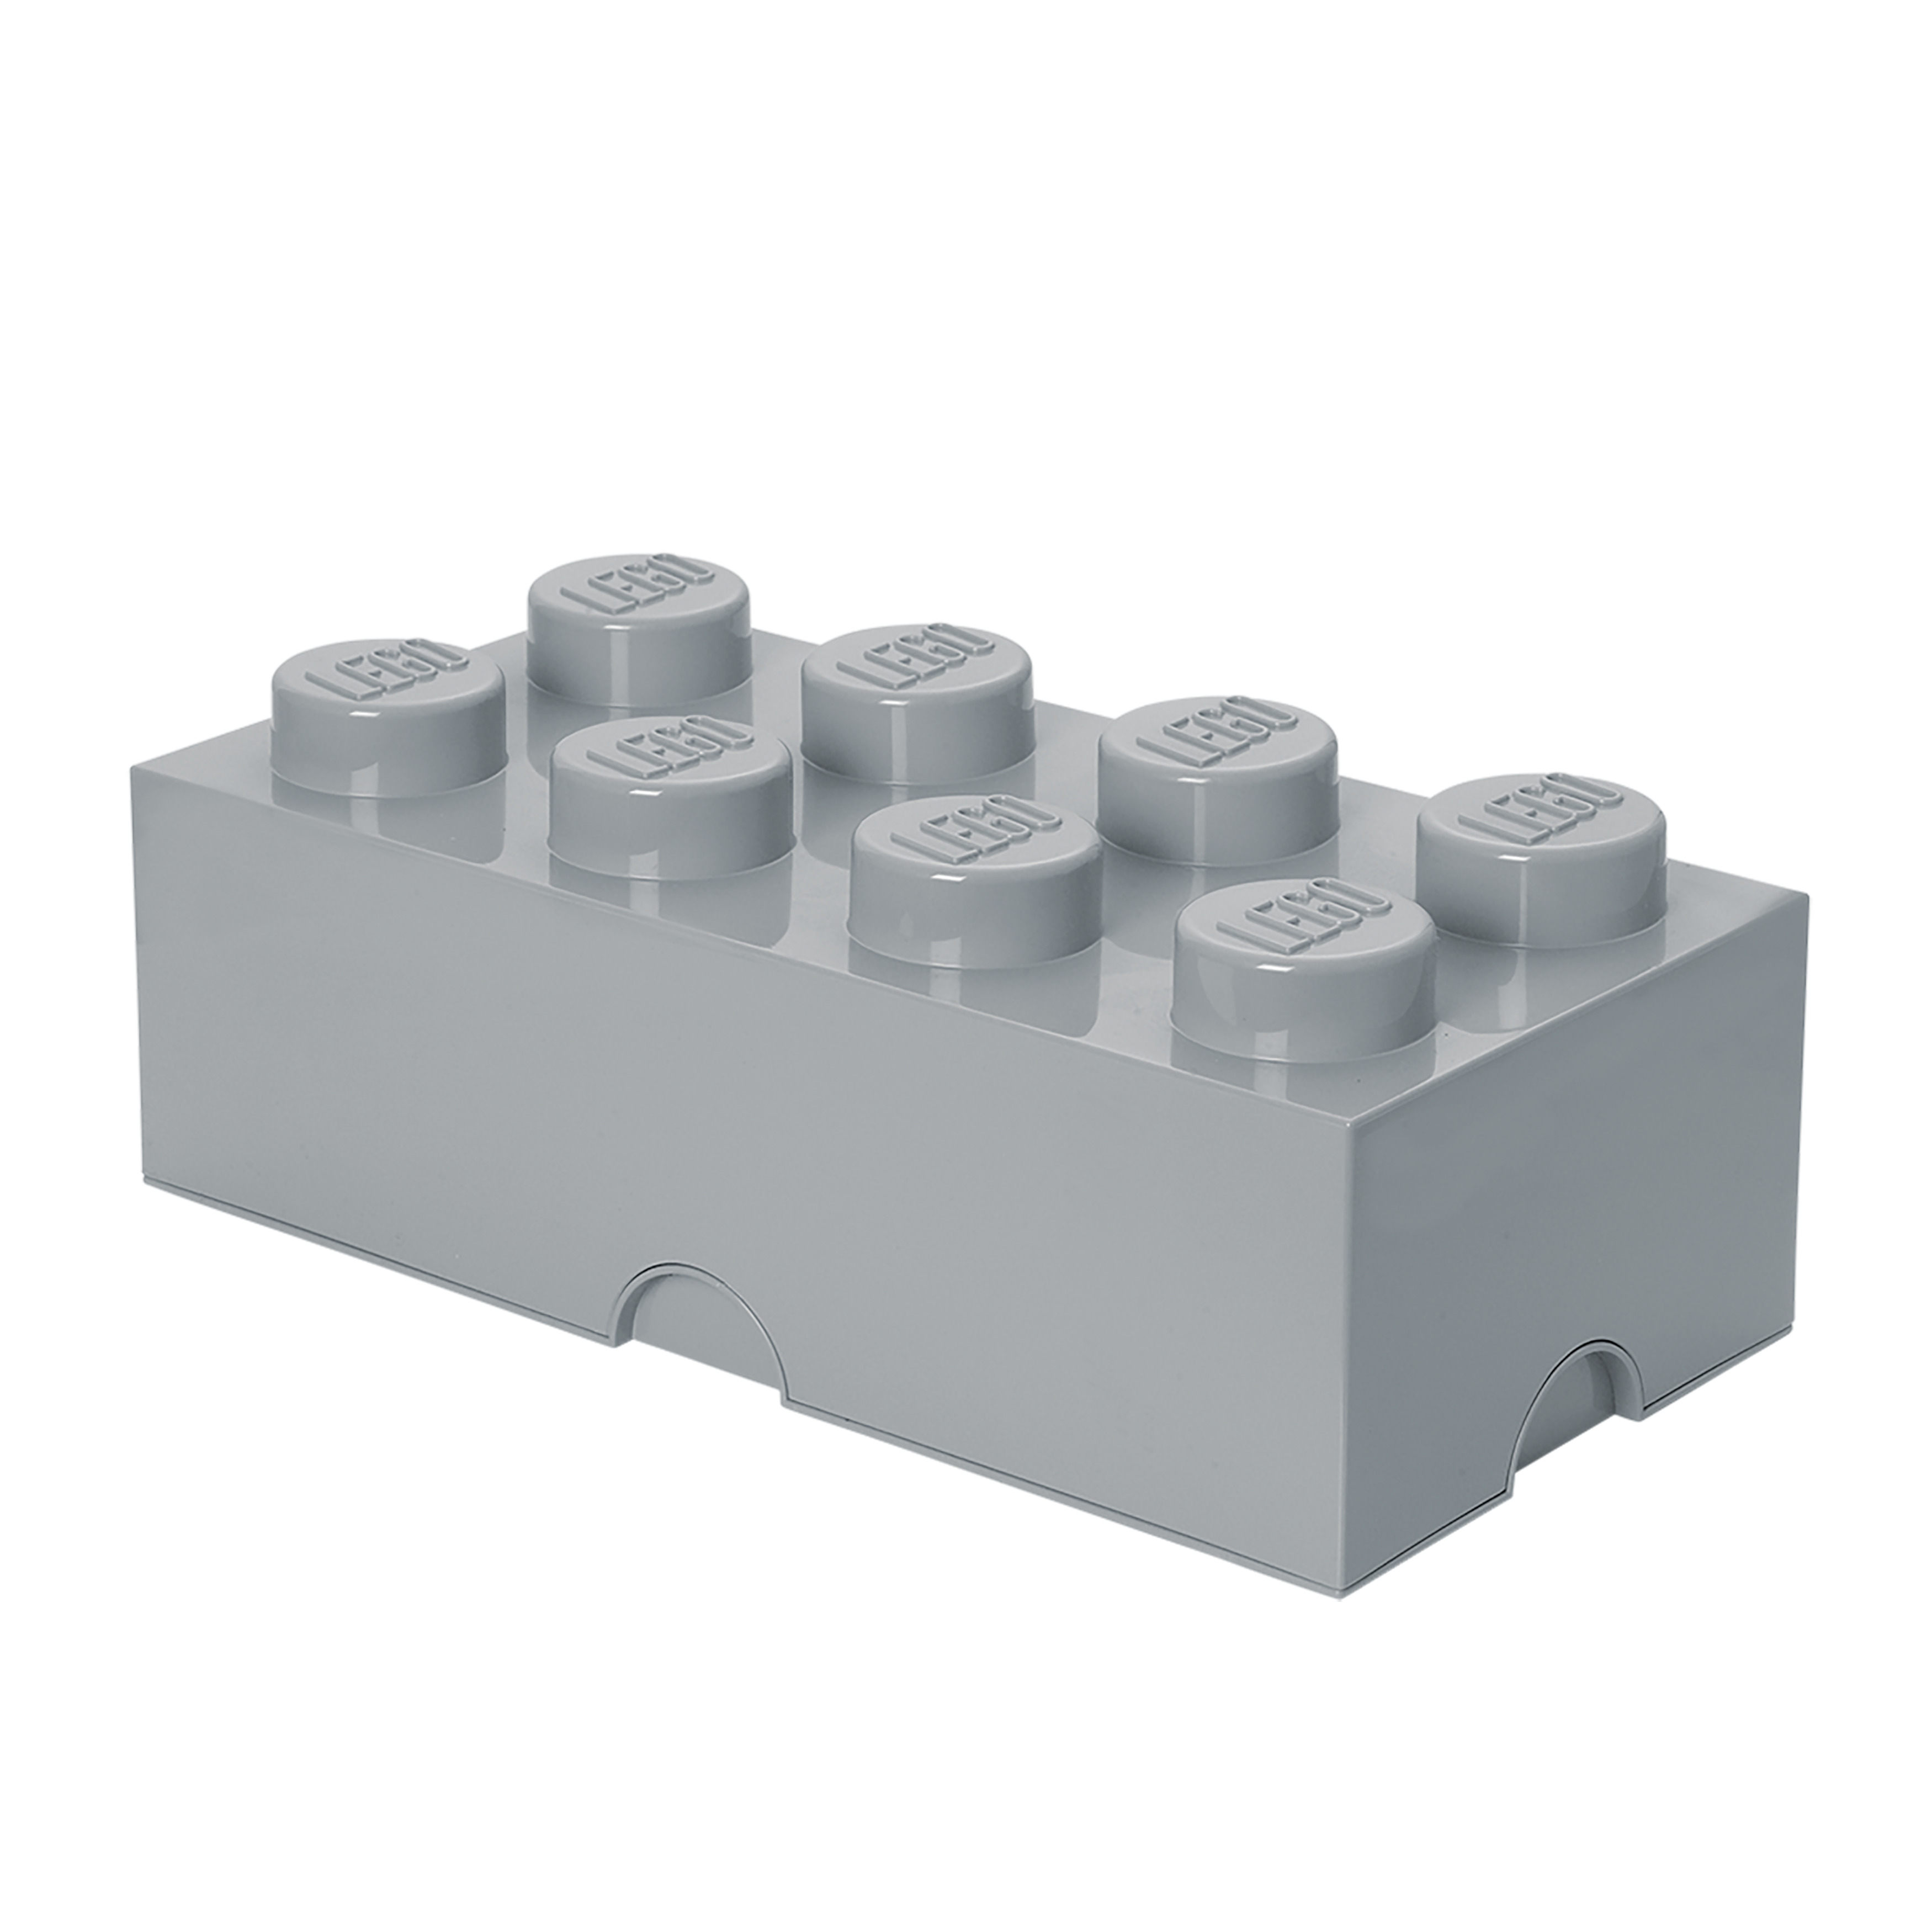 8-Stud Storage Brick – Stone Gray 5007268, Other